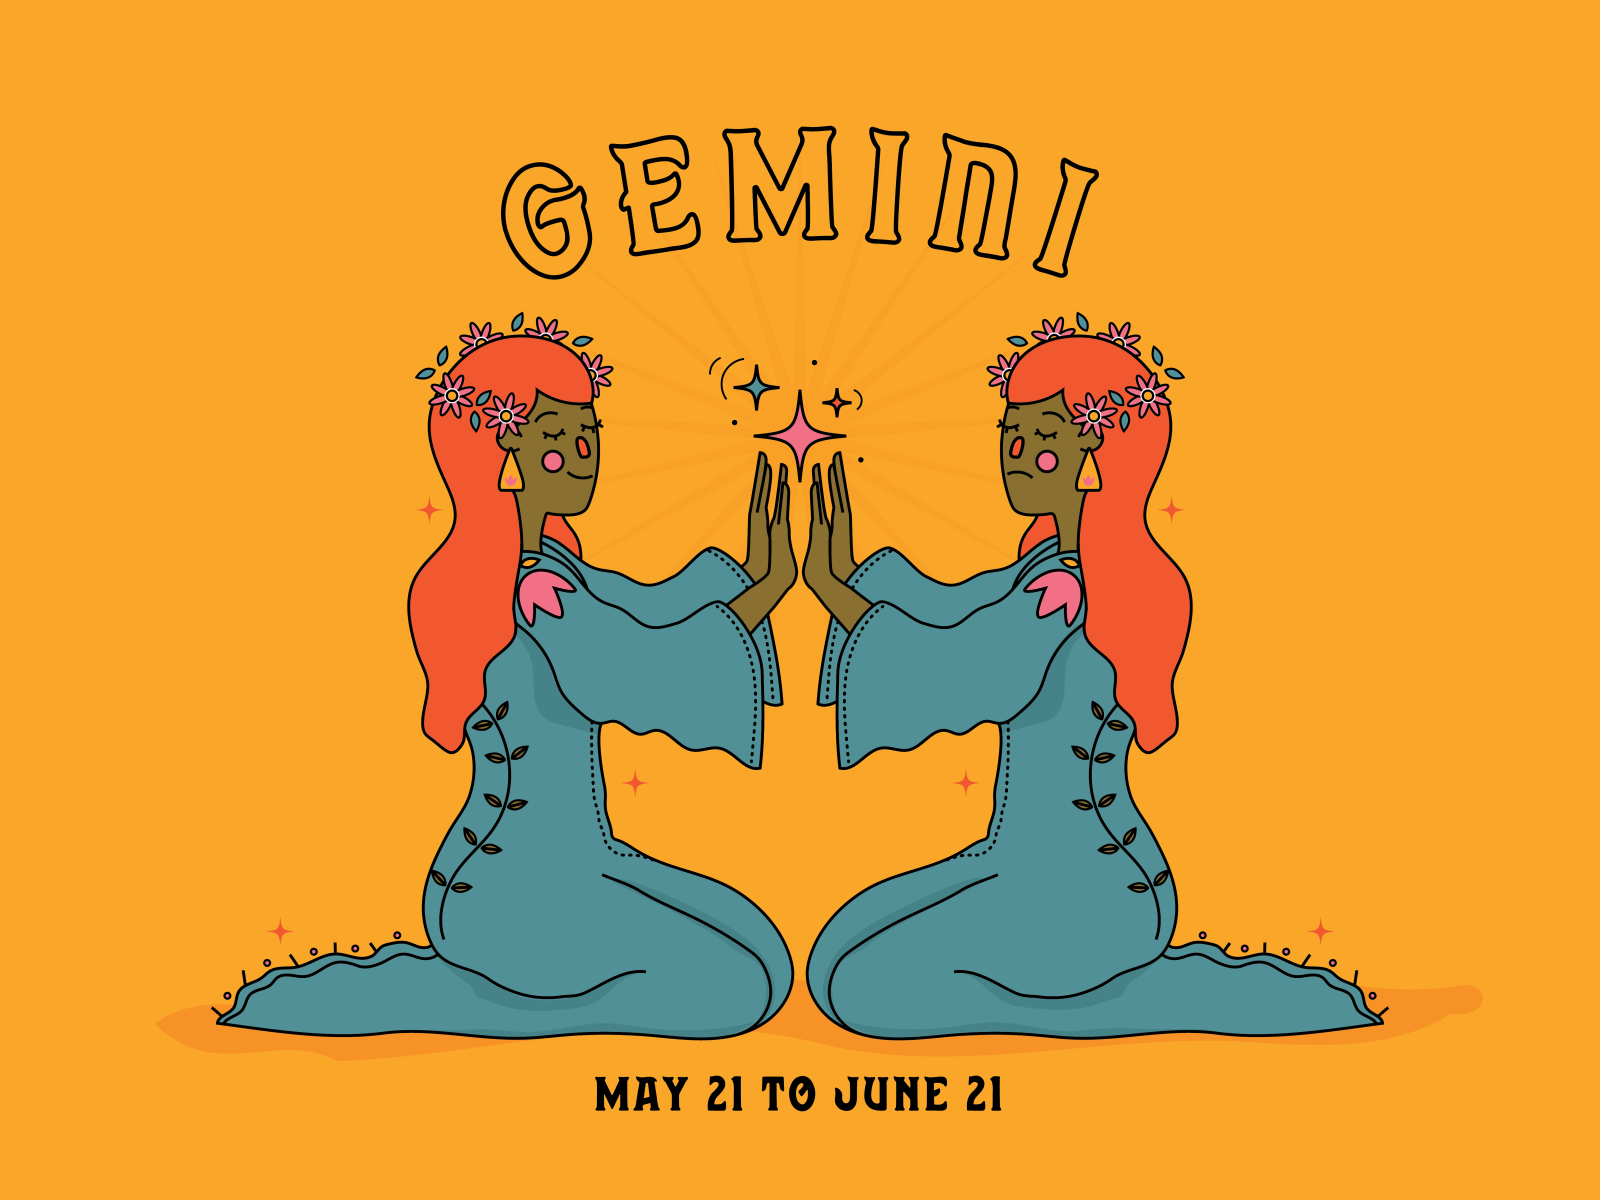 Gemini by Renae Lorentz on Dribbble